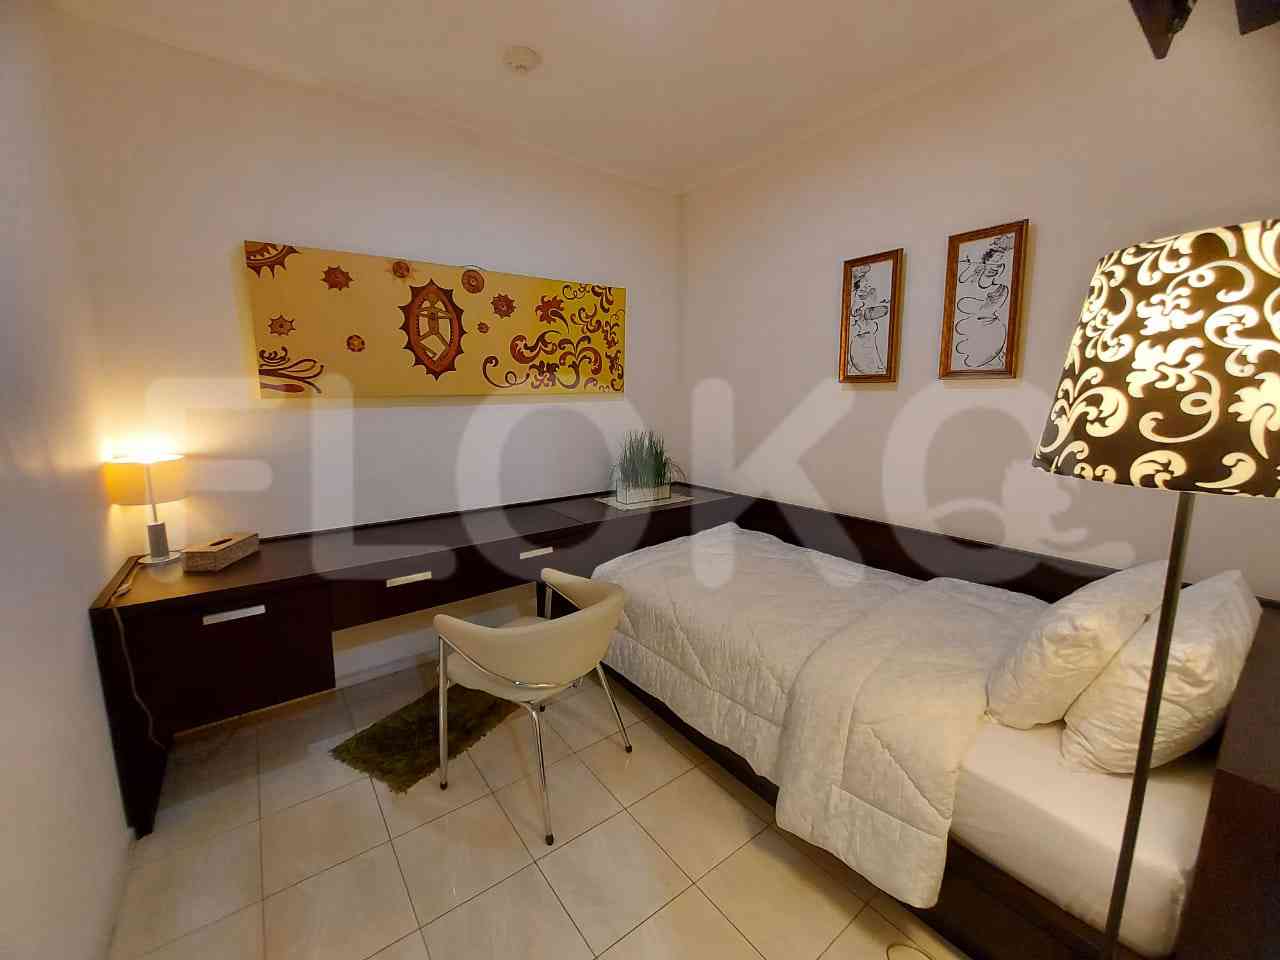 2 Bedroom on 24th Floor for Rent in FX Residence - fsu69d 1